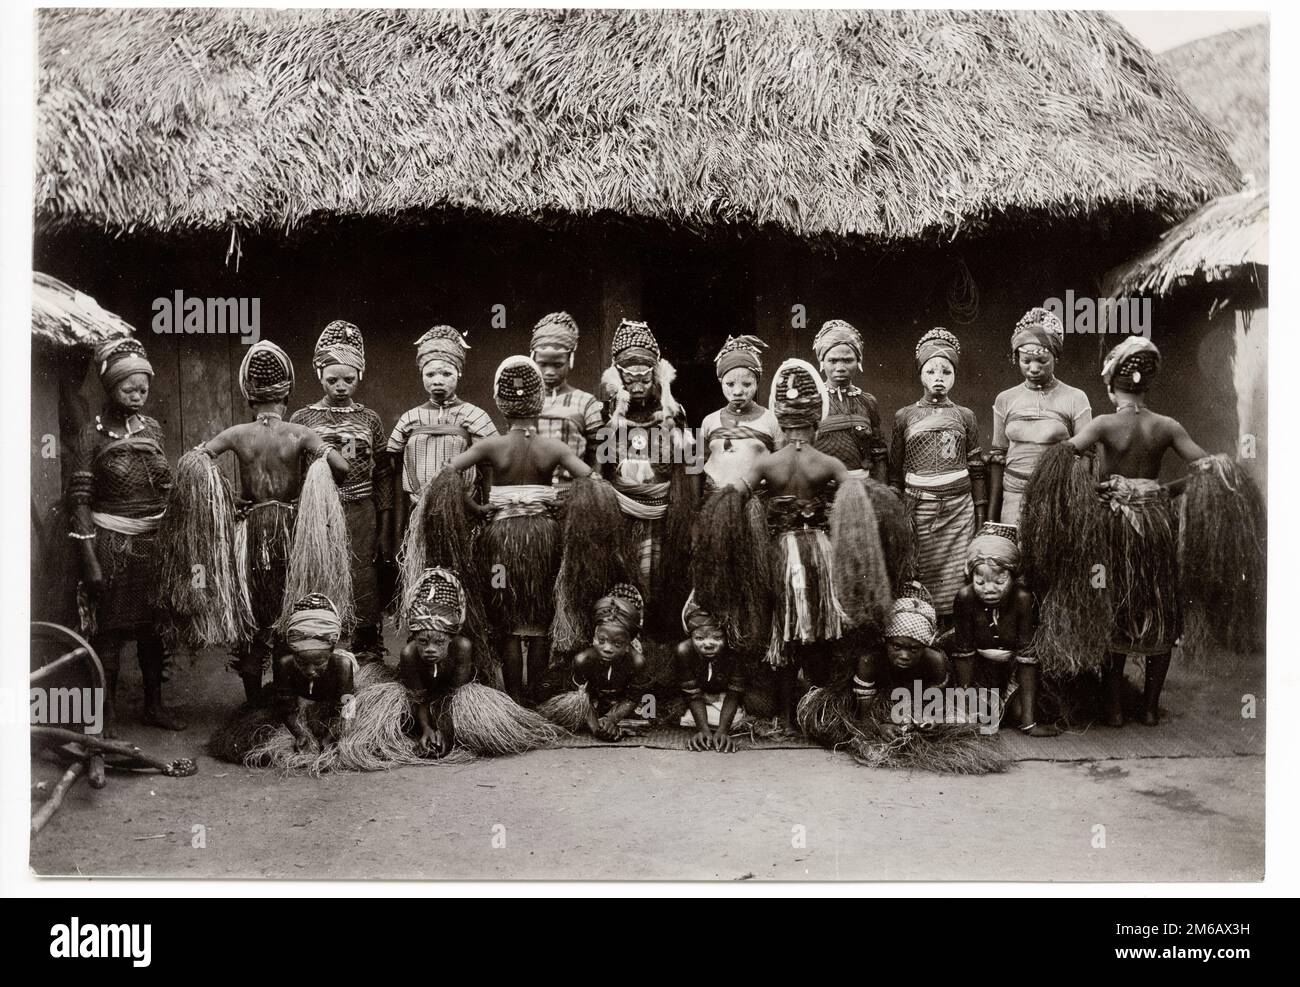 Alphonso Lisk-Carew studio: c.1910 West Africa Sierra Leone - Bundo bundu group, Sande society Stock Photo